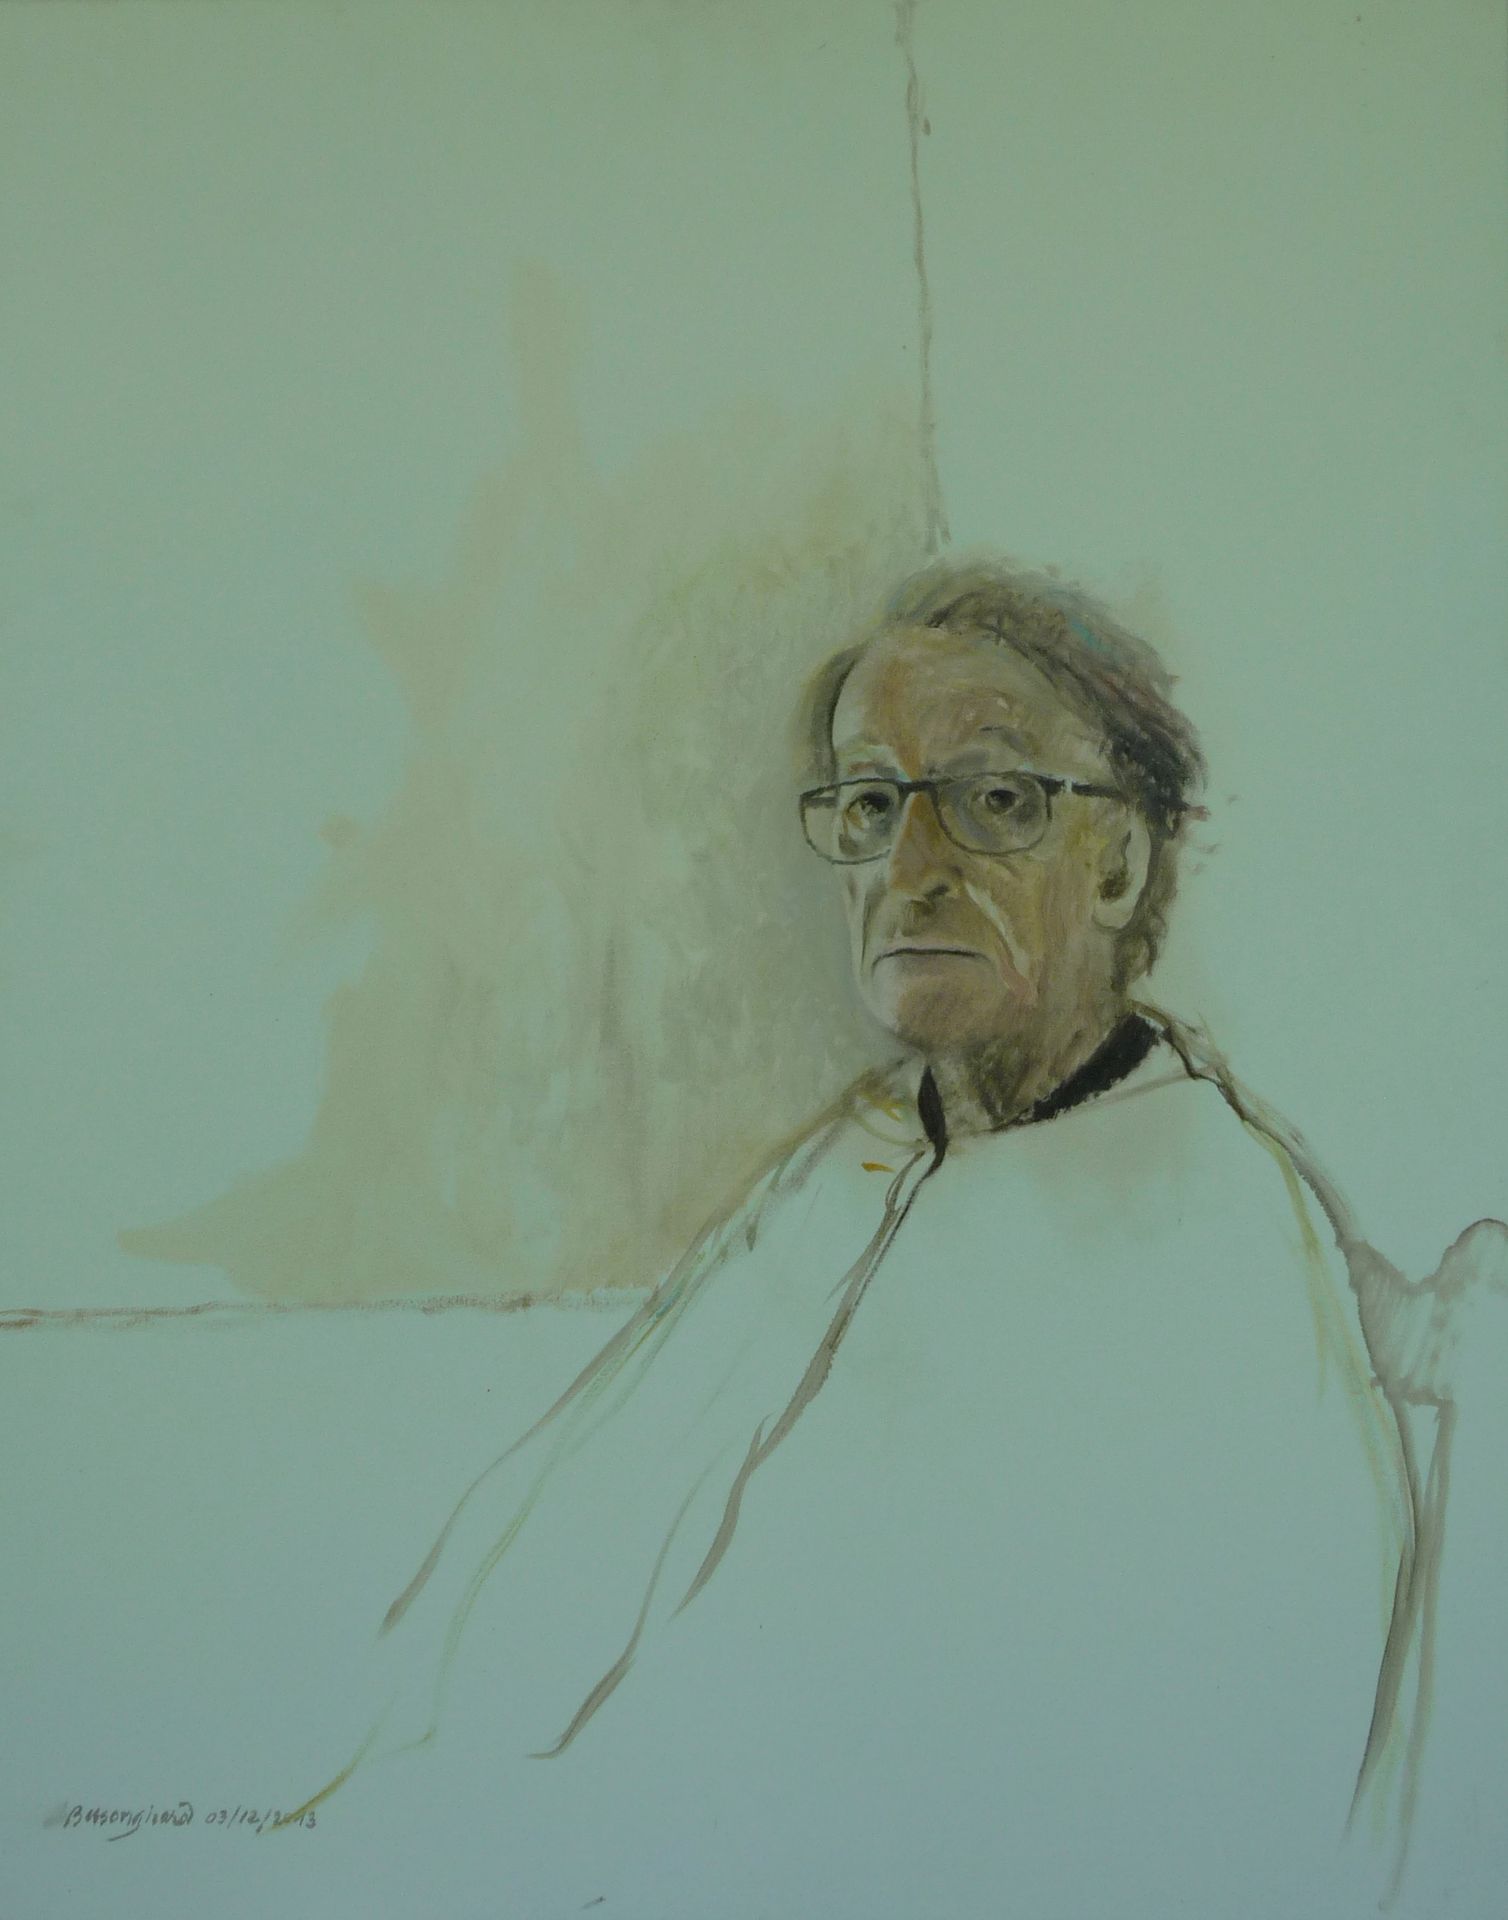 Null 让-克劳德-贝松-吉拉尔 (1938-2021)

自画像, 2013

布面油画，左下角有签名和日期03/12/2013

81 x 65 cm